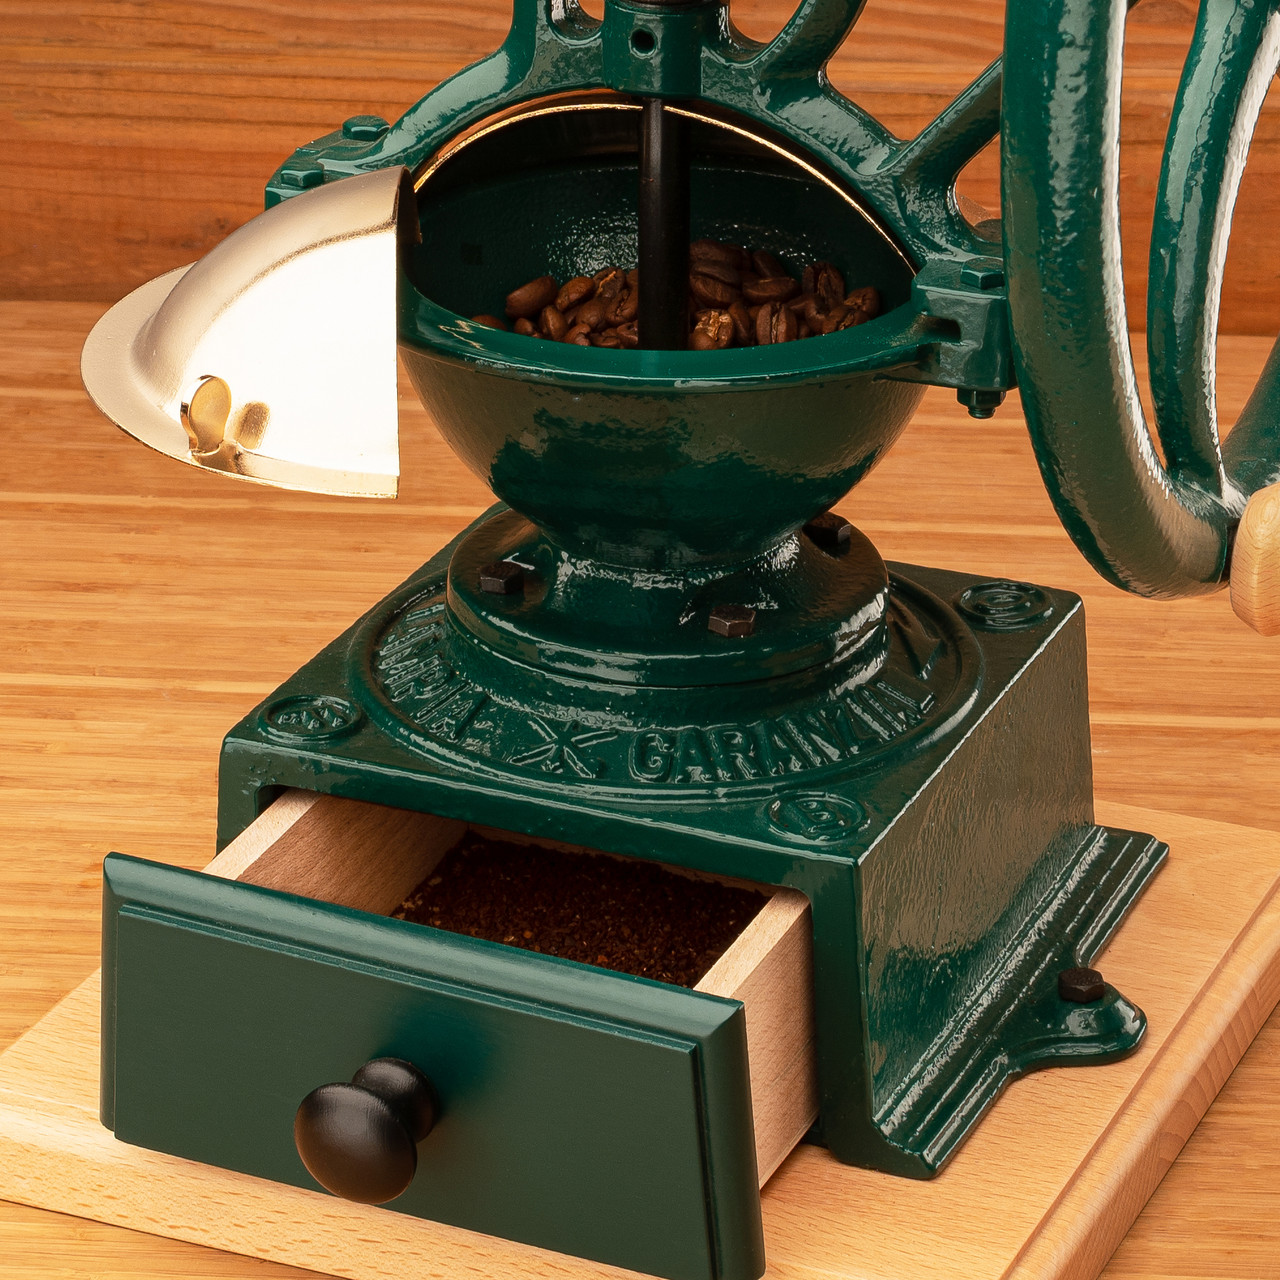 Large Coffee Grinder - Green - Italian-Made Hand Crank - Burr Style